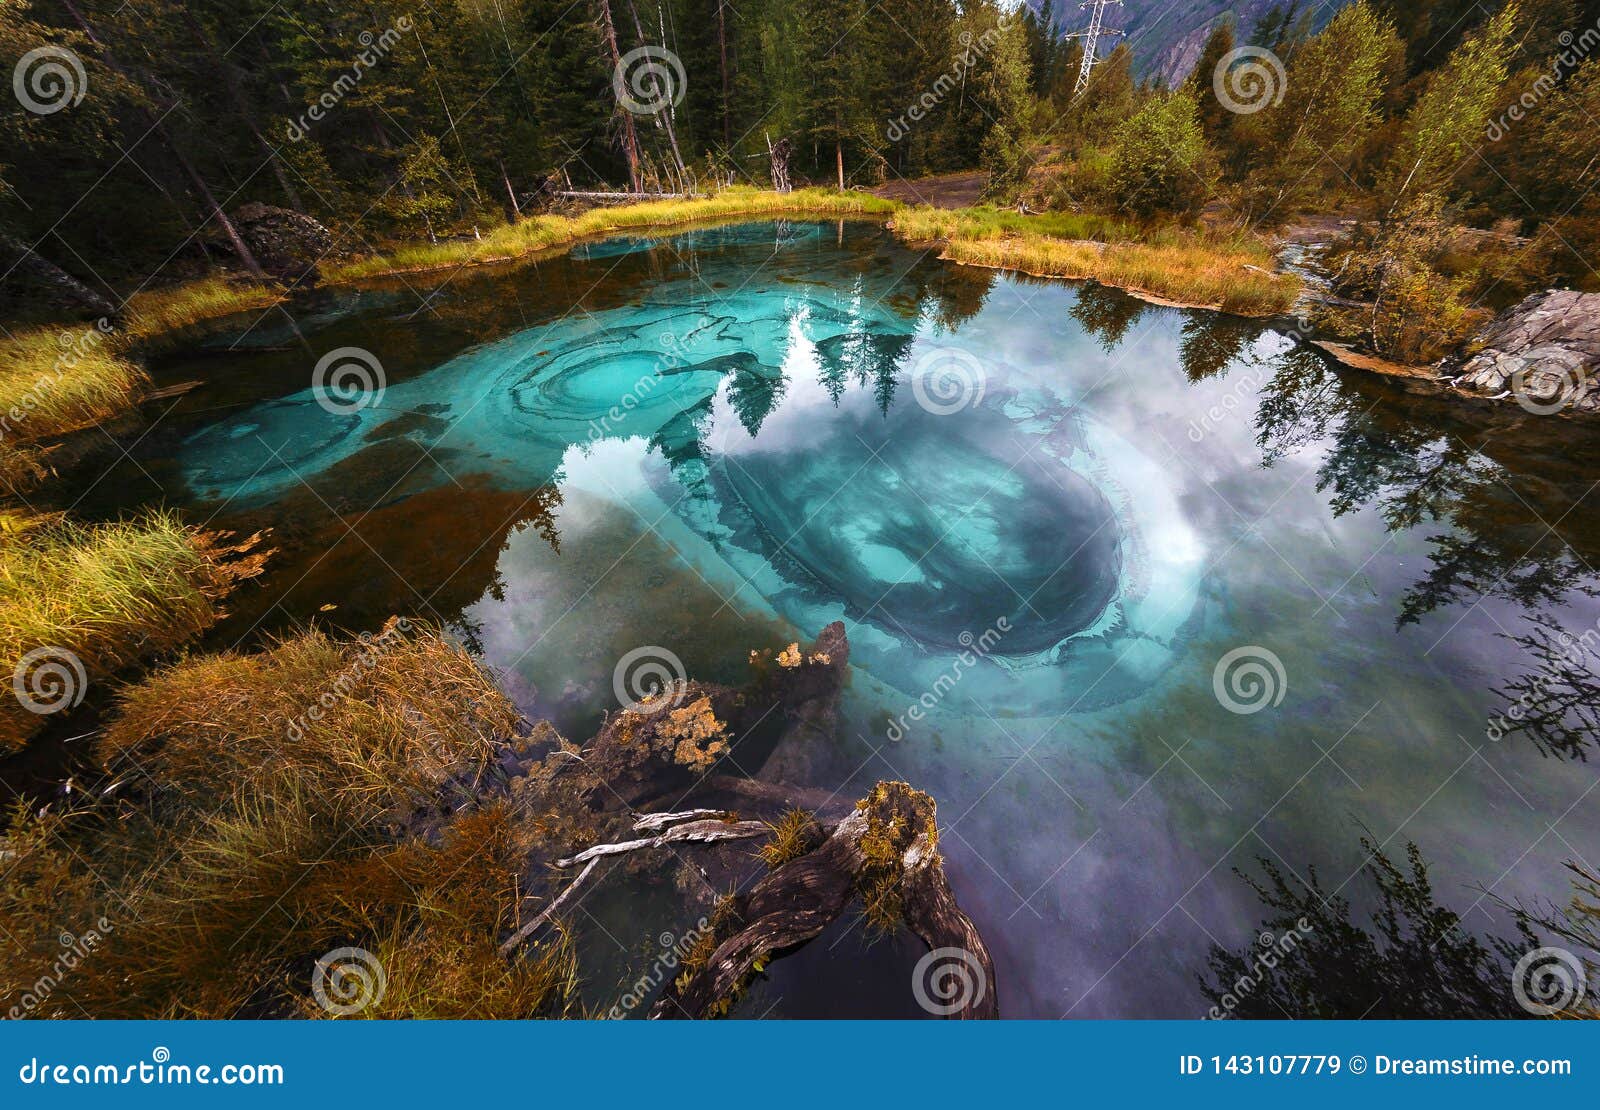 blue geyser lake in altai mountains, altai republic, siberia, russia